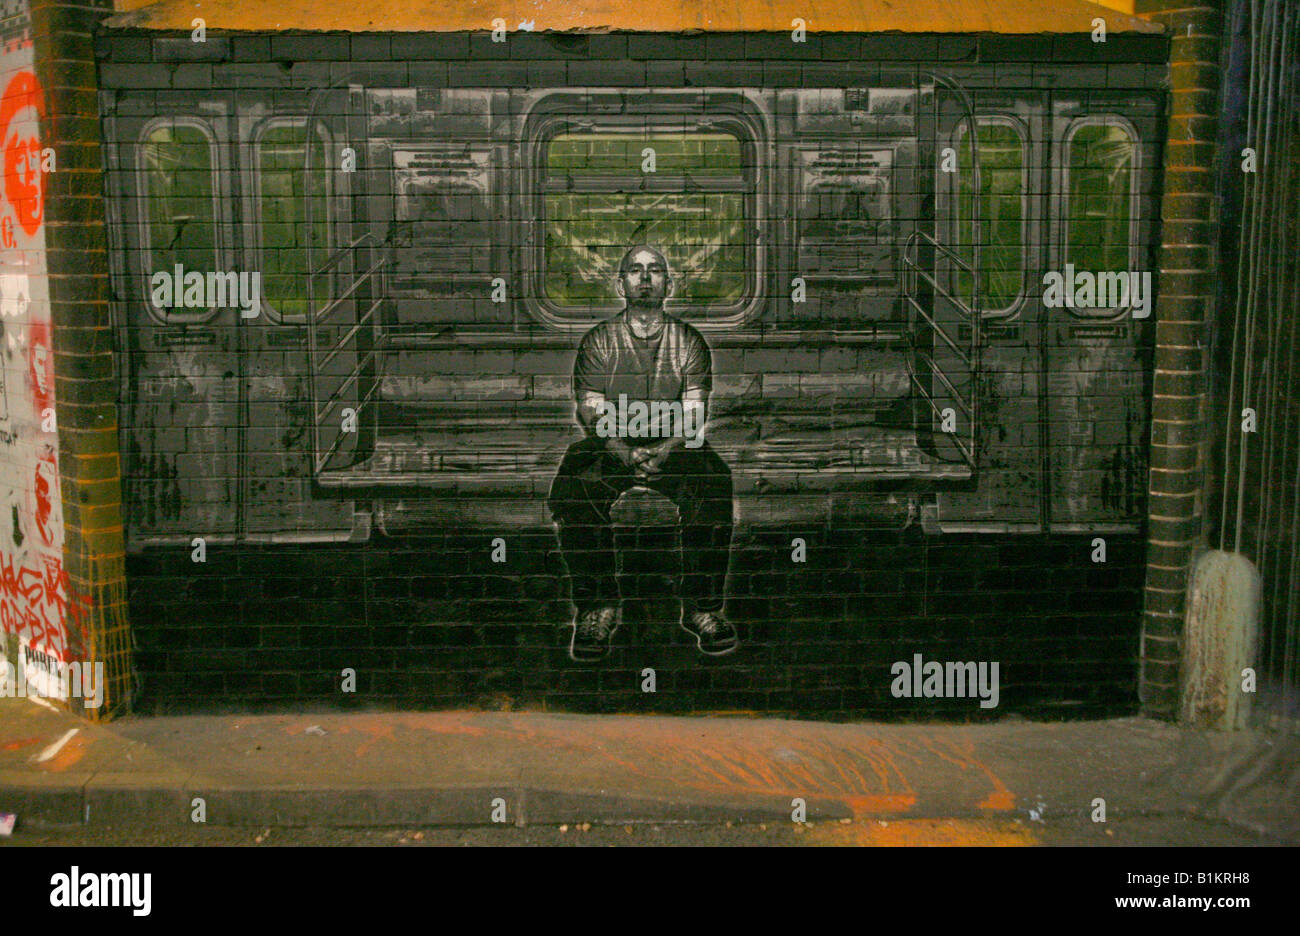 Artwork d'un métro de New York par steeev chariot Banque D'Images